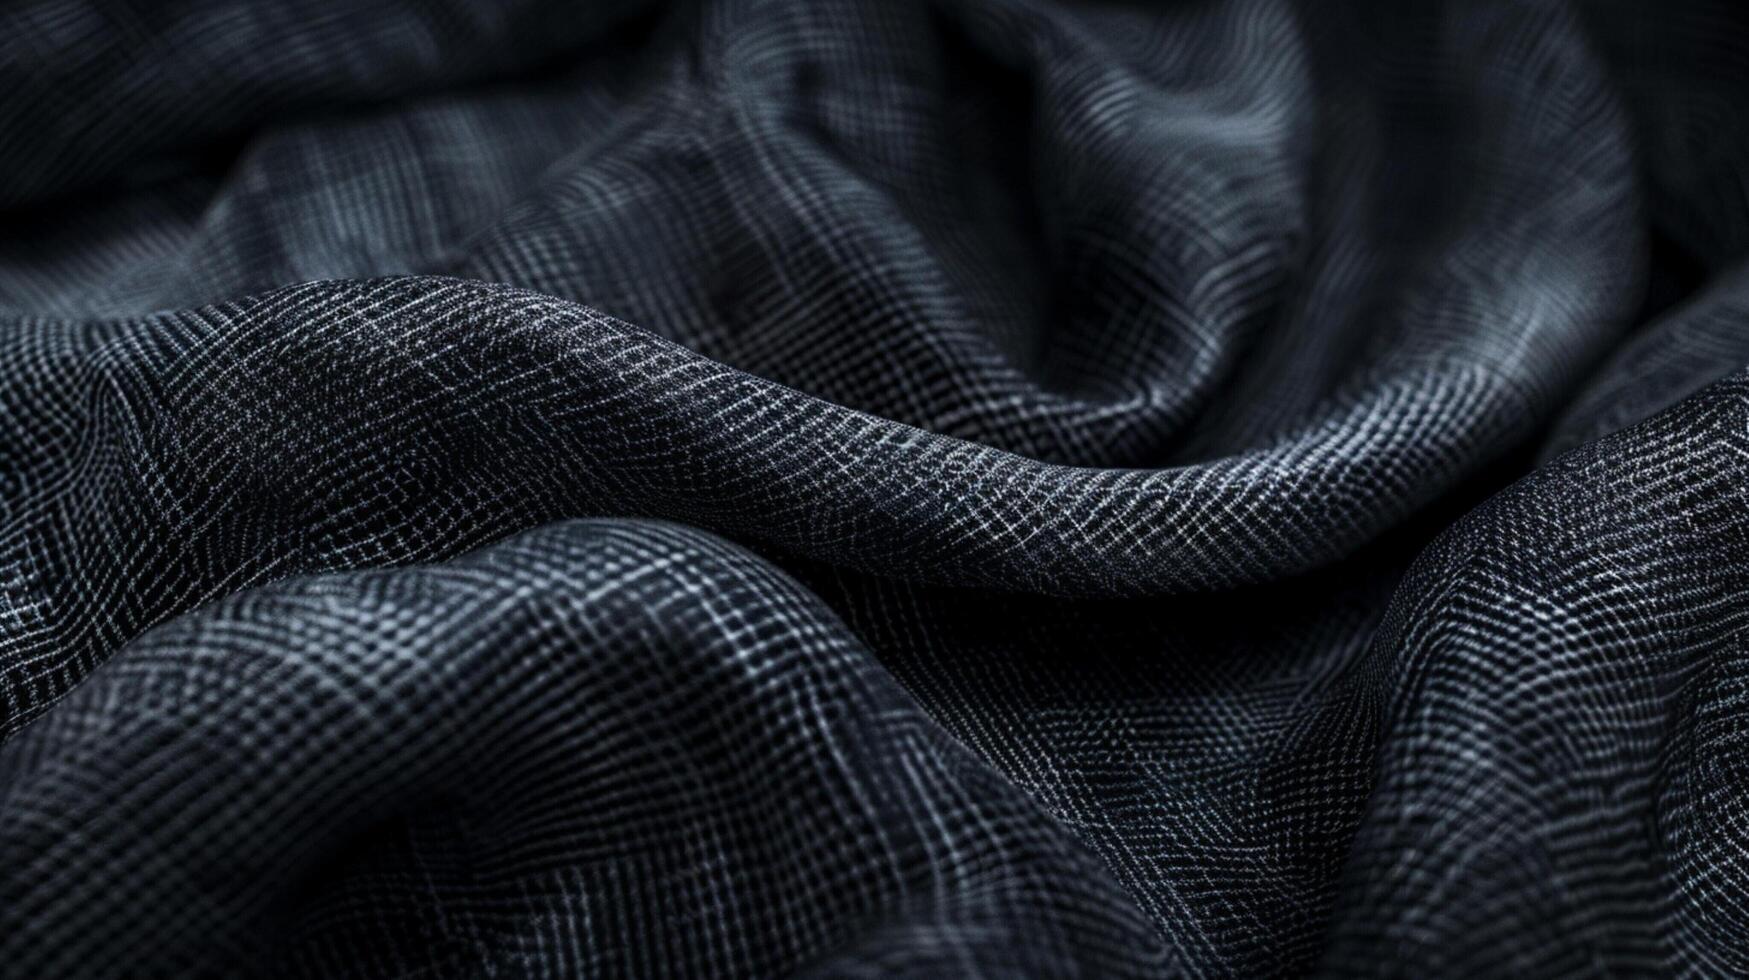 black fabric textile textured background detail photo